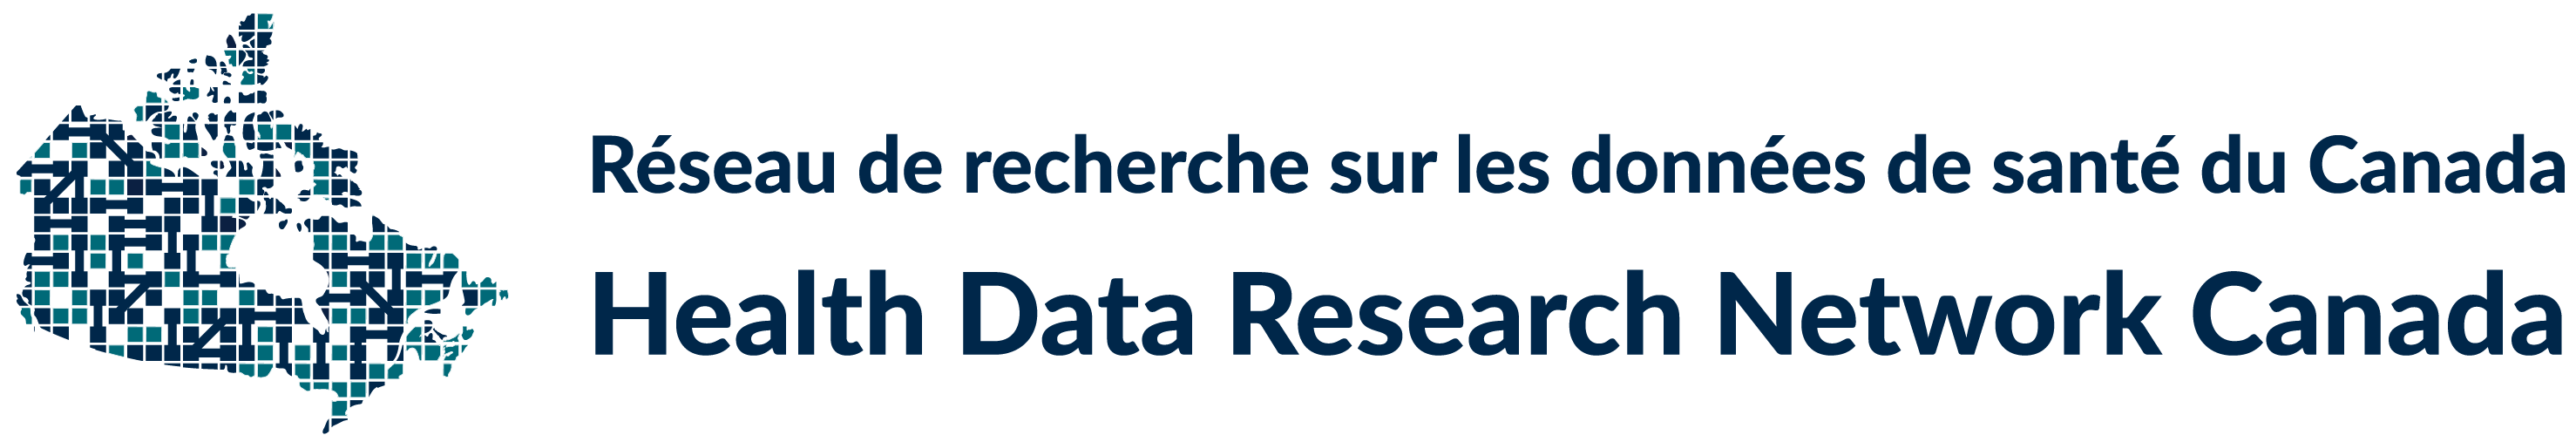 Health Data Research Network Canada